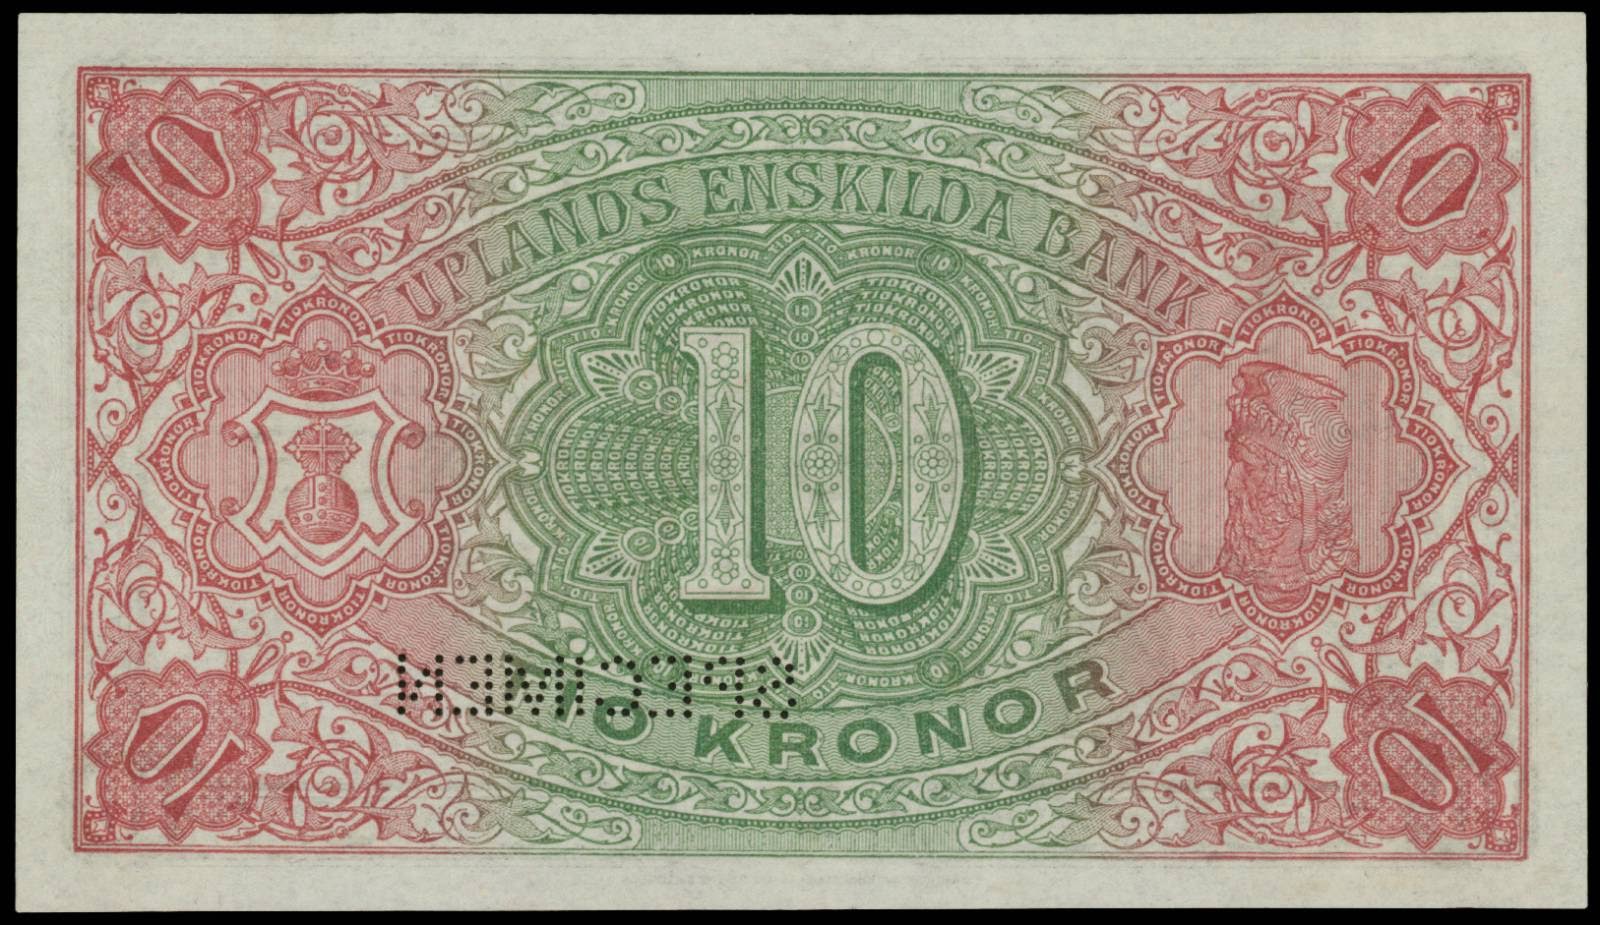 T me blank banknotes. Банкнота 10 бань. 10 Крон Швеция 1874 купюра. Денежные купюры Швеция с двух сторон. Фон эстонских крон.